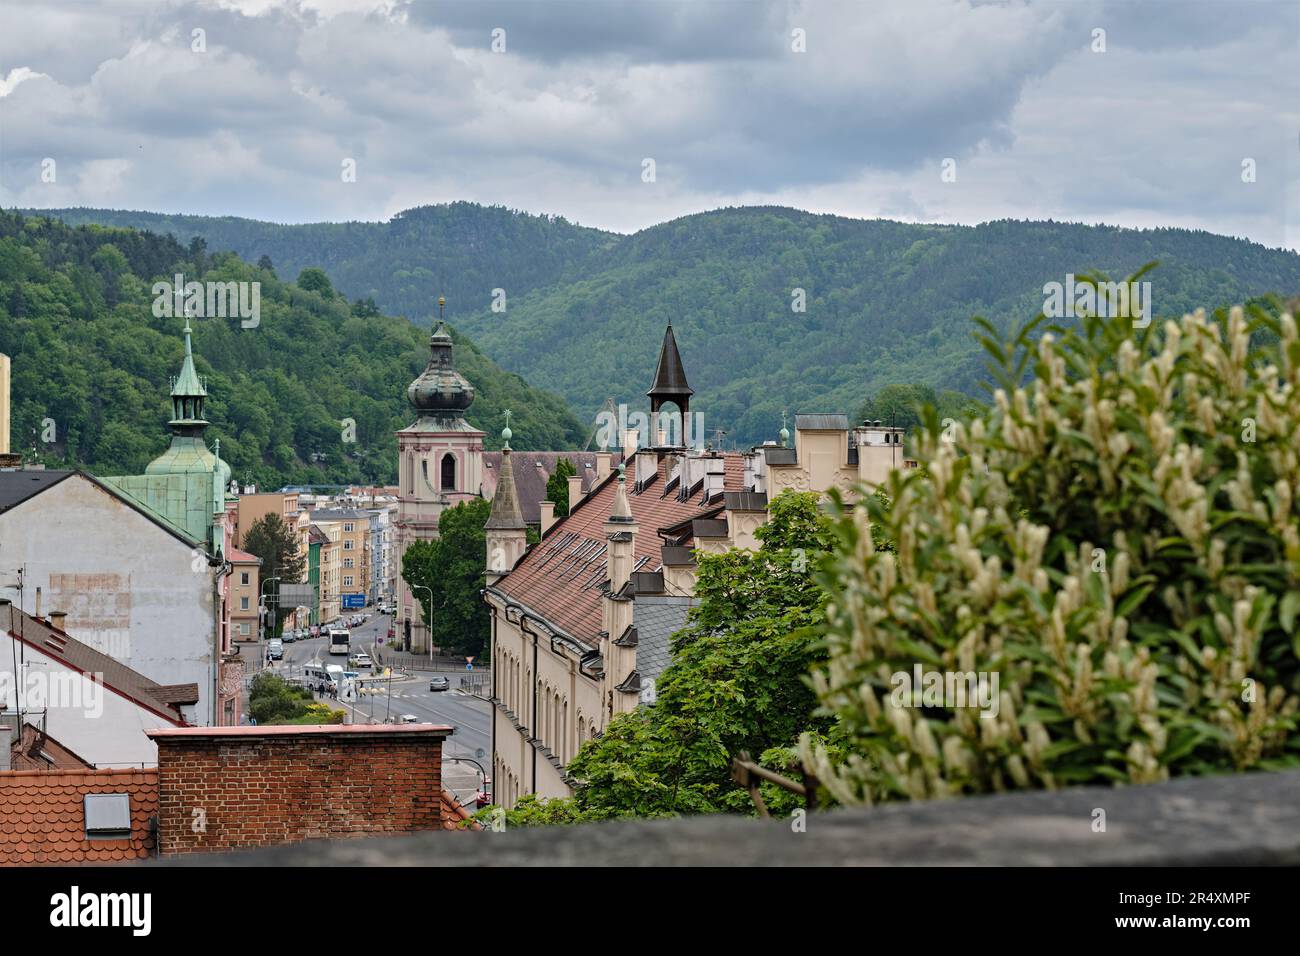 High view of Decin (Tetschen), Czech Republic. Old villas, baroque buildings, churches and communist-built panel block of flats. Tourist destination. Stock Photo